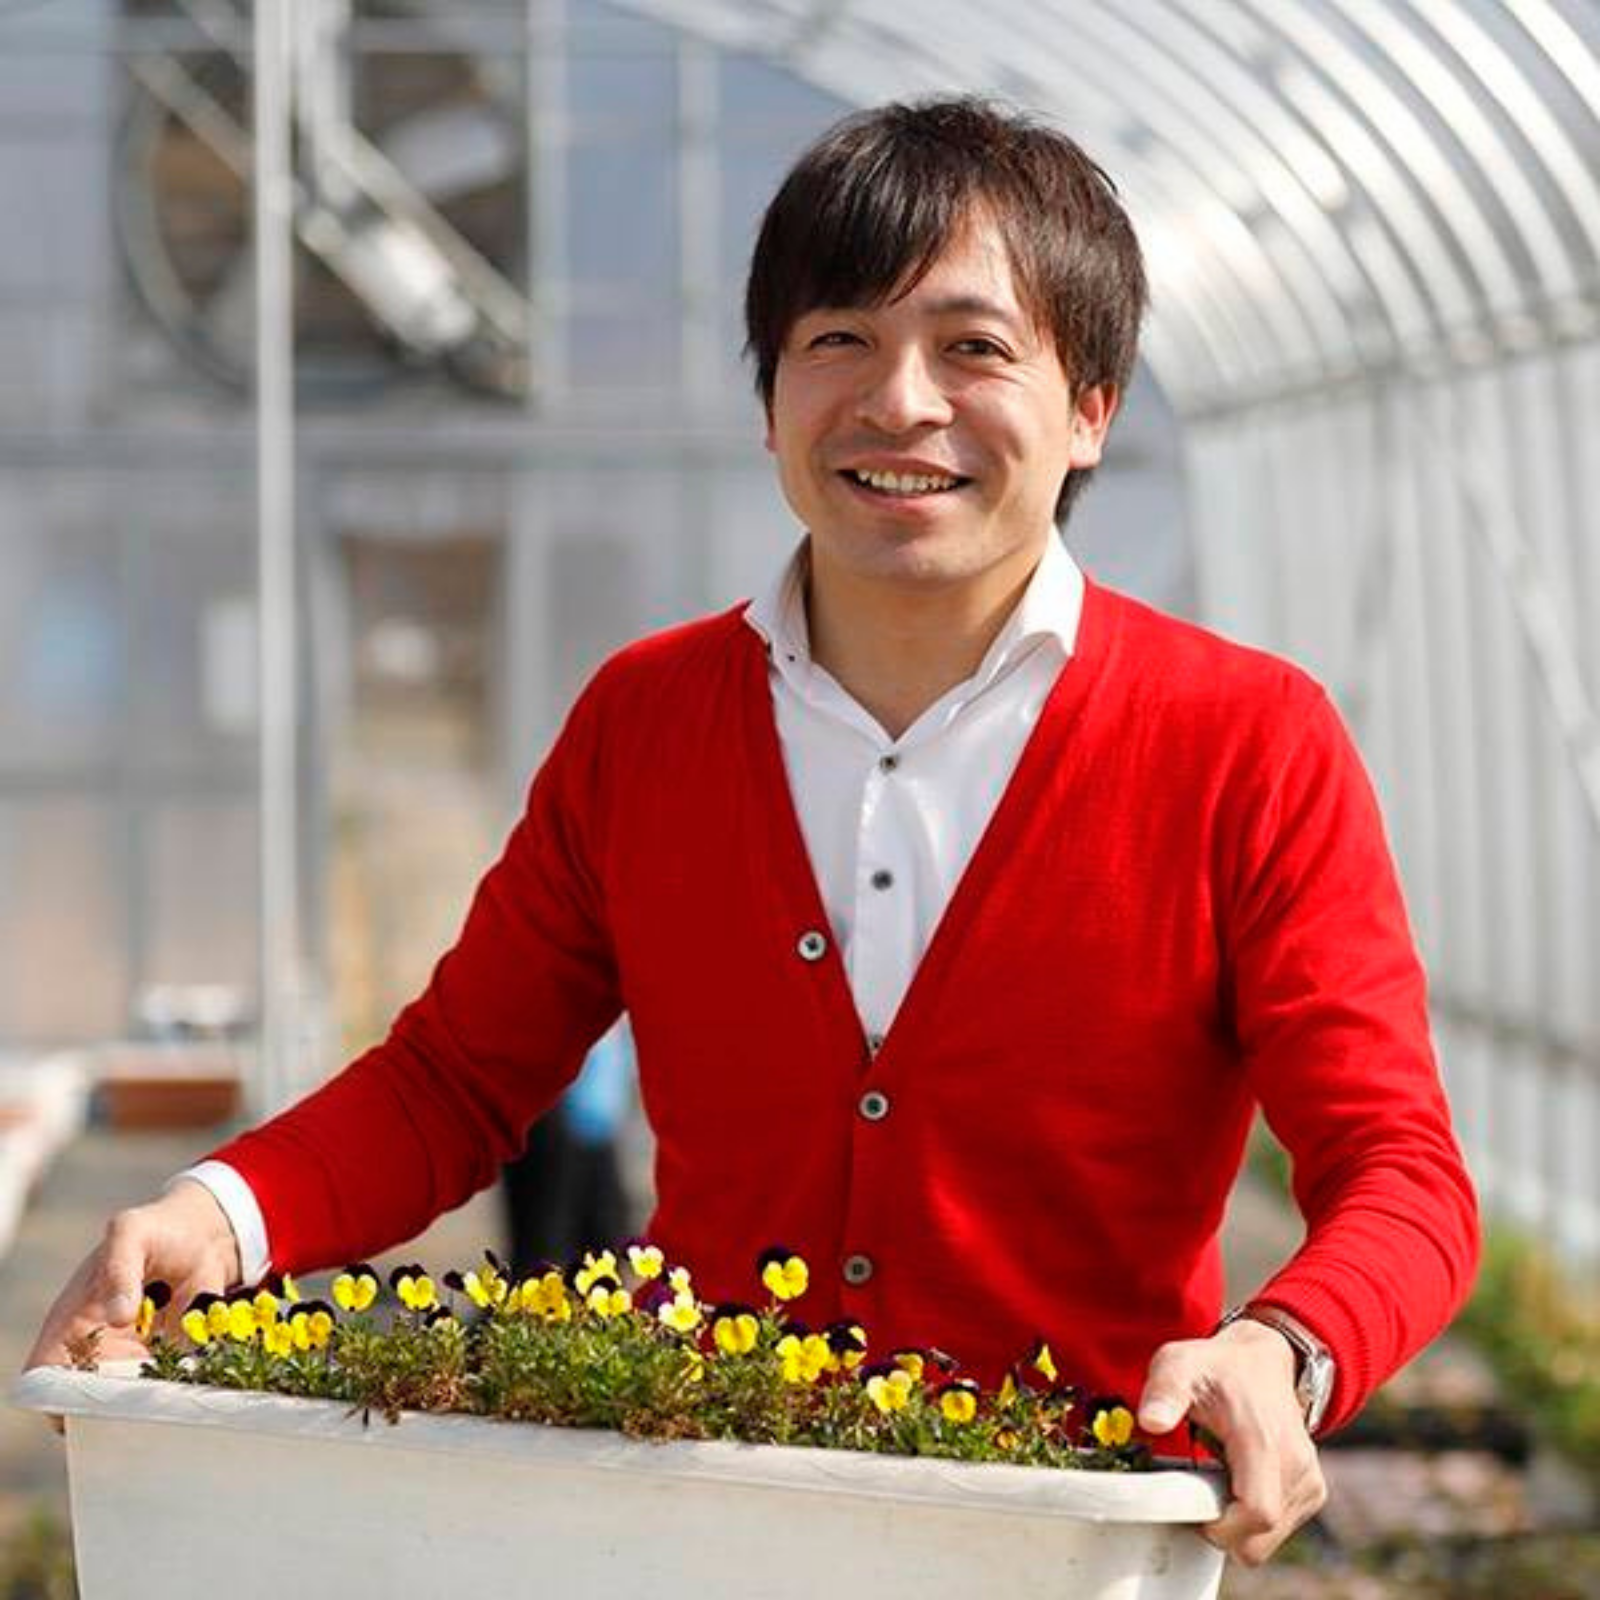 Man holding a edible flower planter